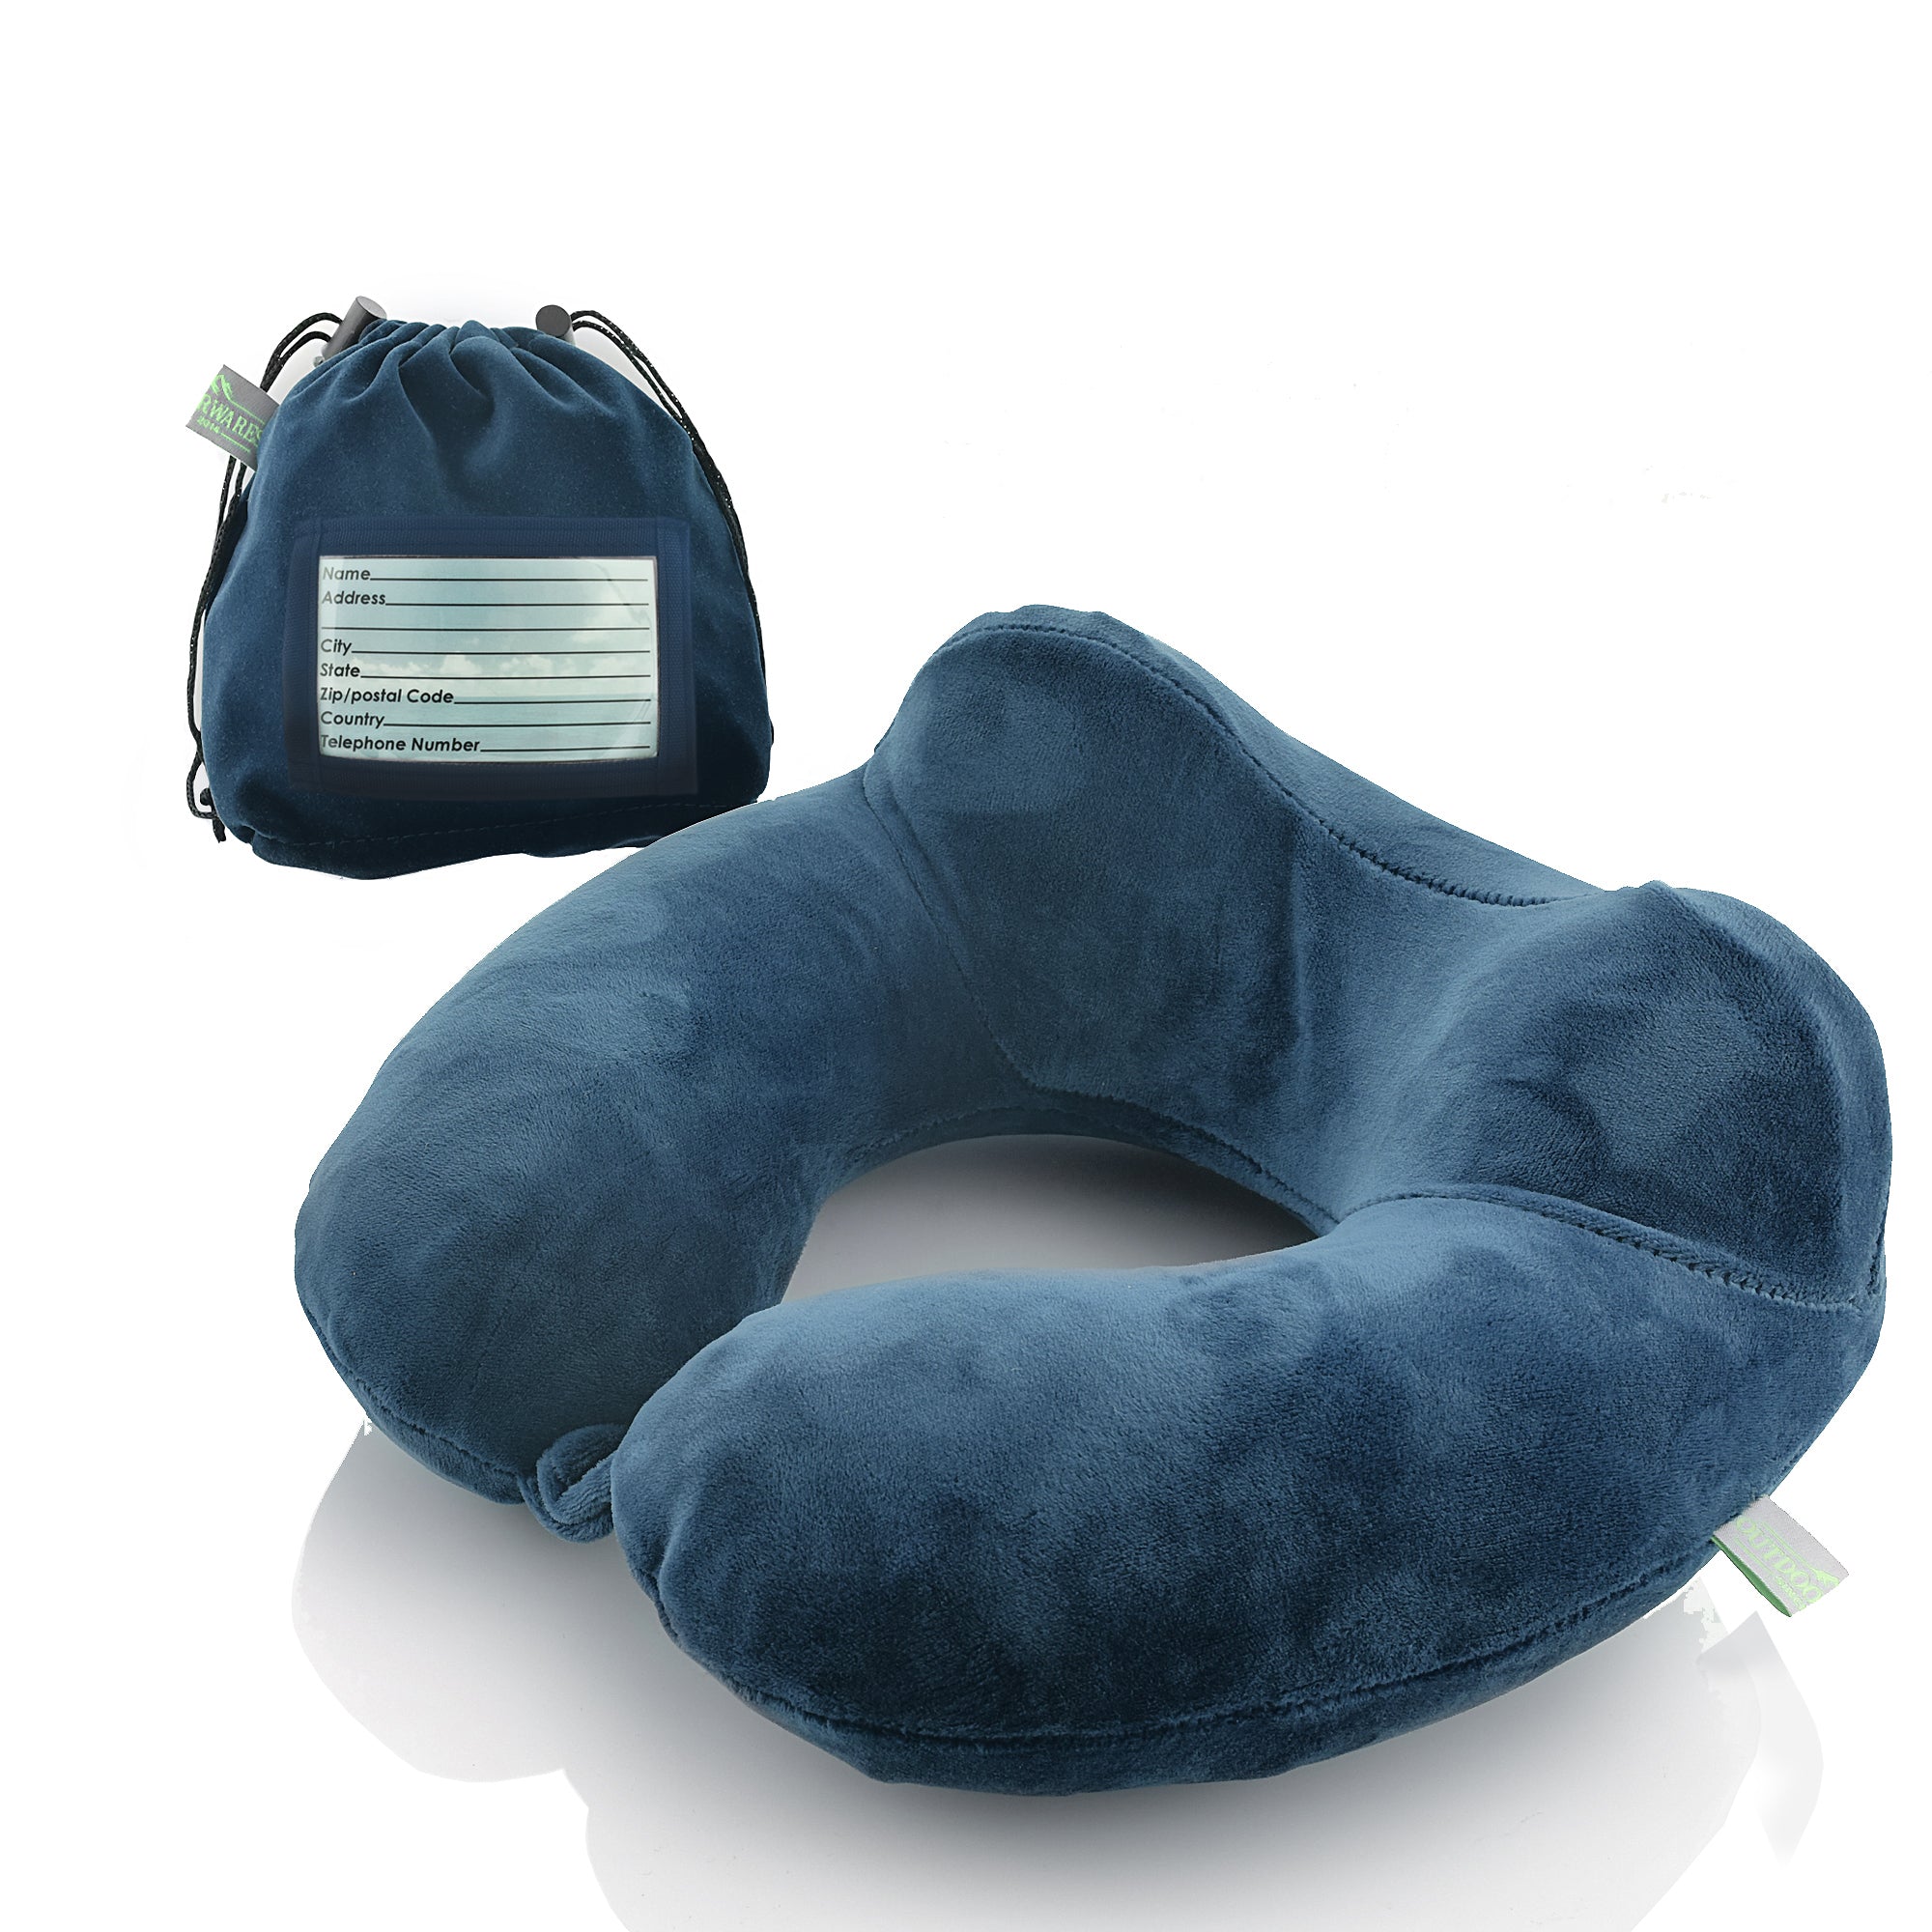 Inflatable Travel Pillow – ZAZADEAL